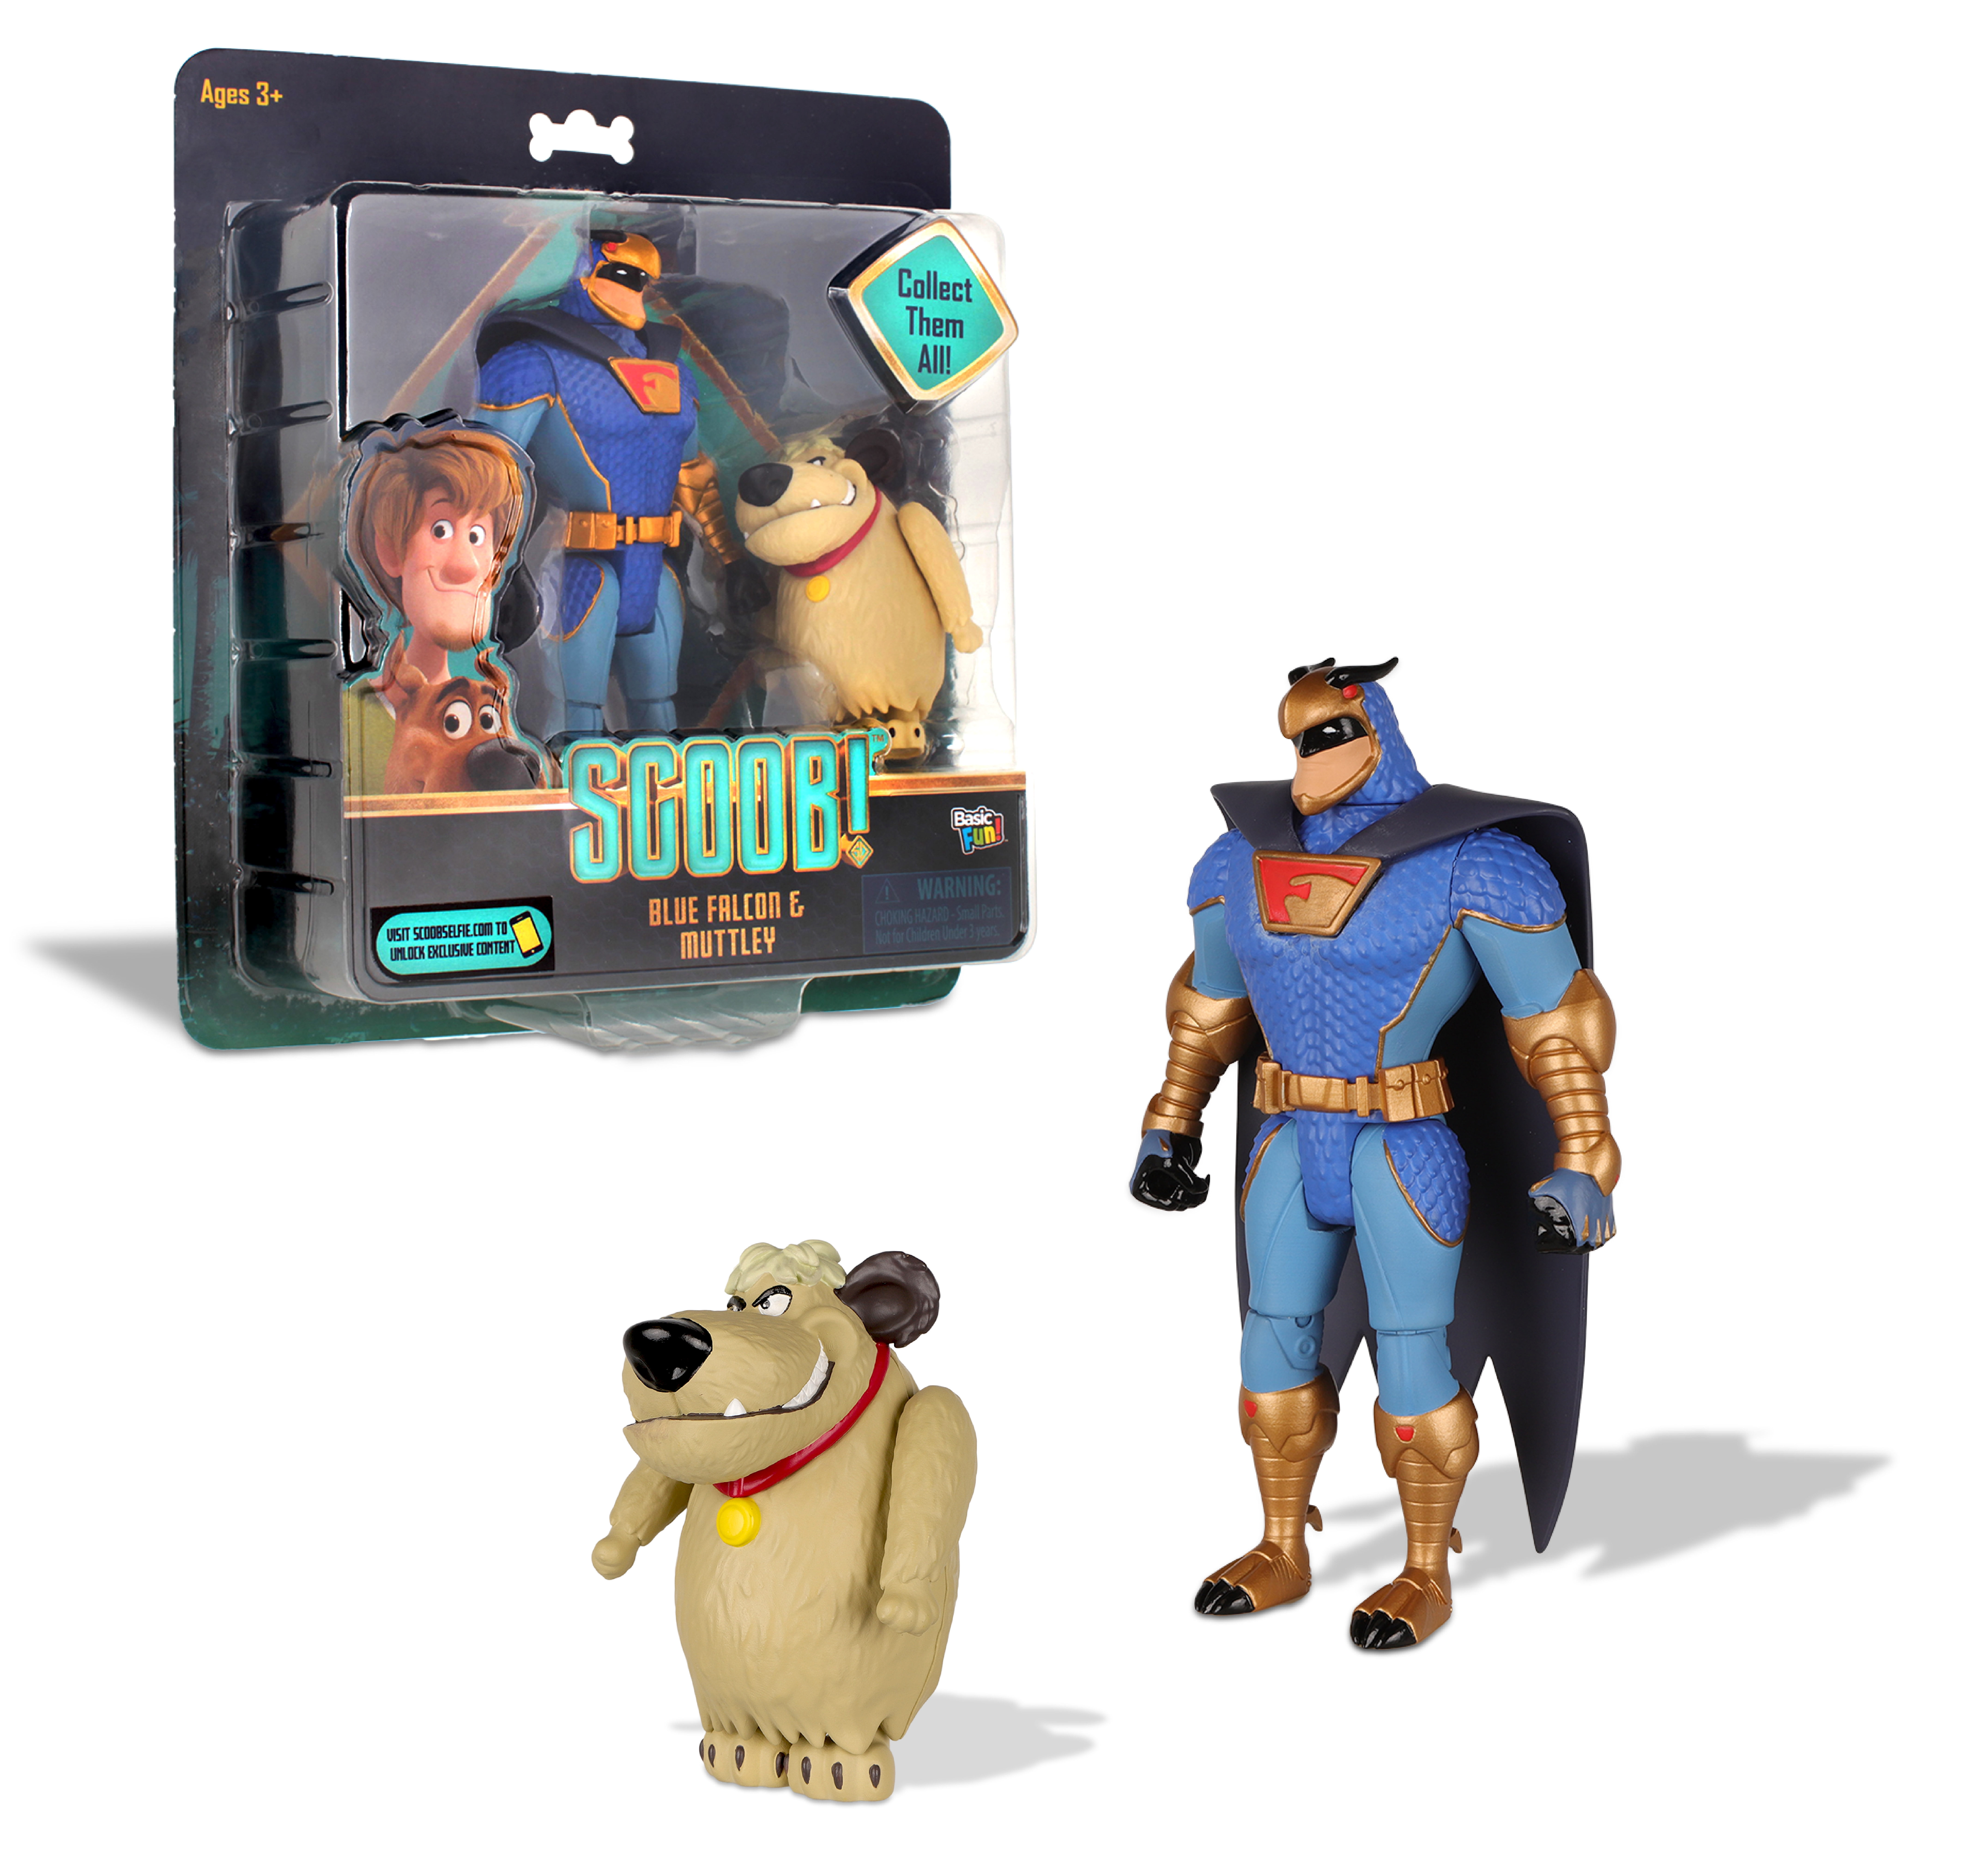 Scoob Movie Scooby Doo & Captain Caveman 6" Action Figures Playset 2020 for sale online 